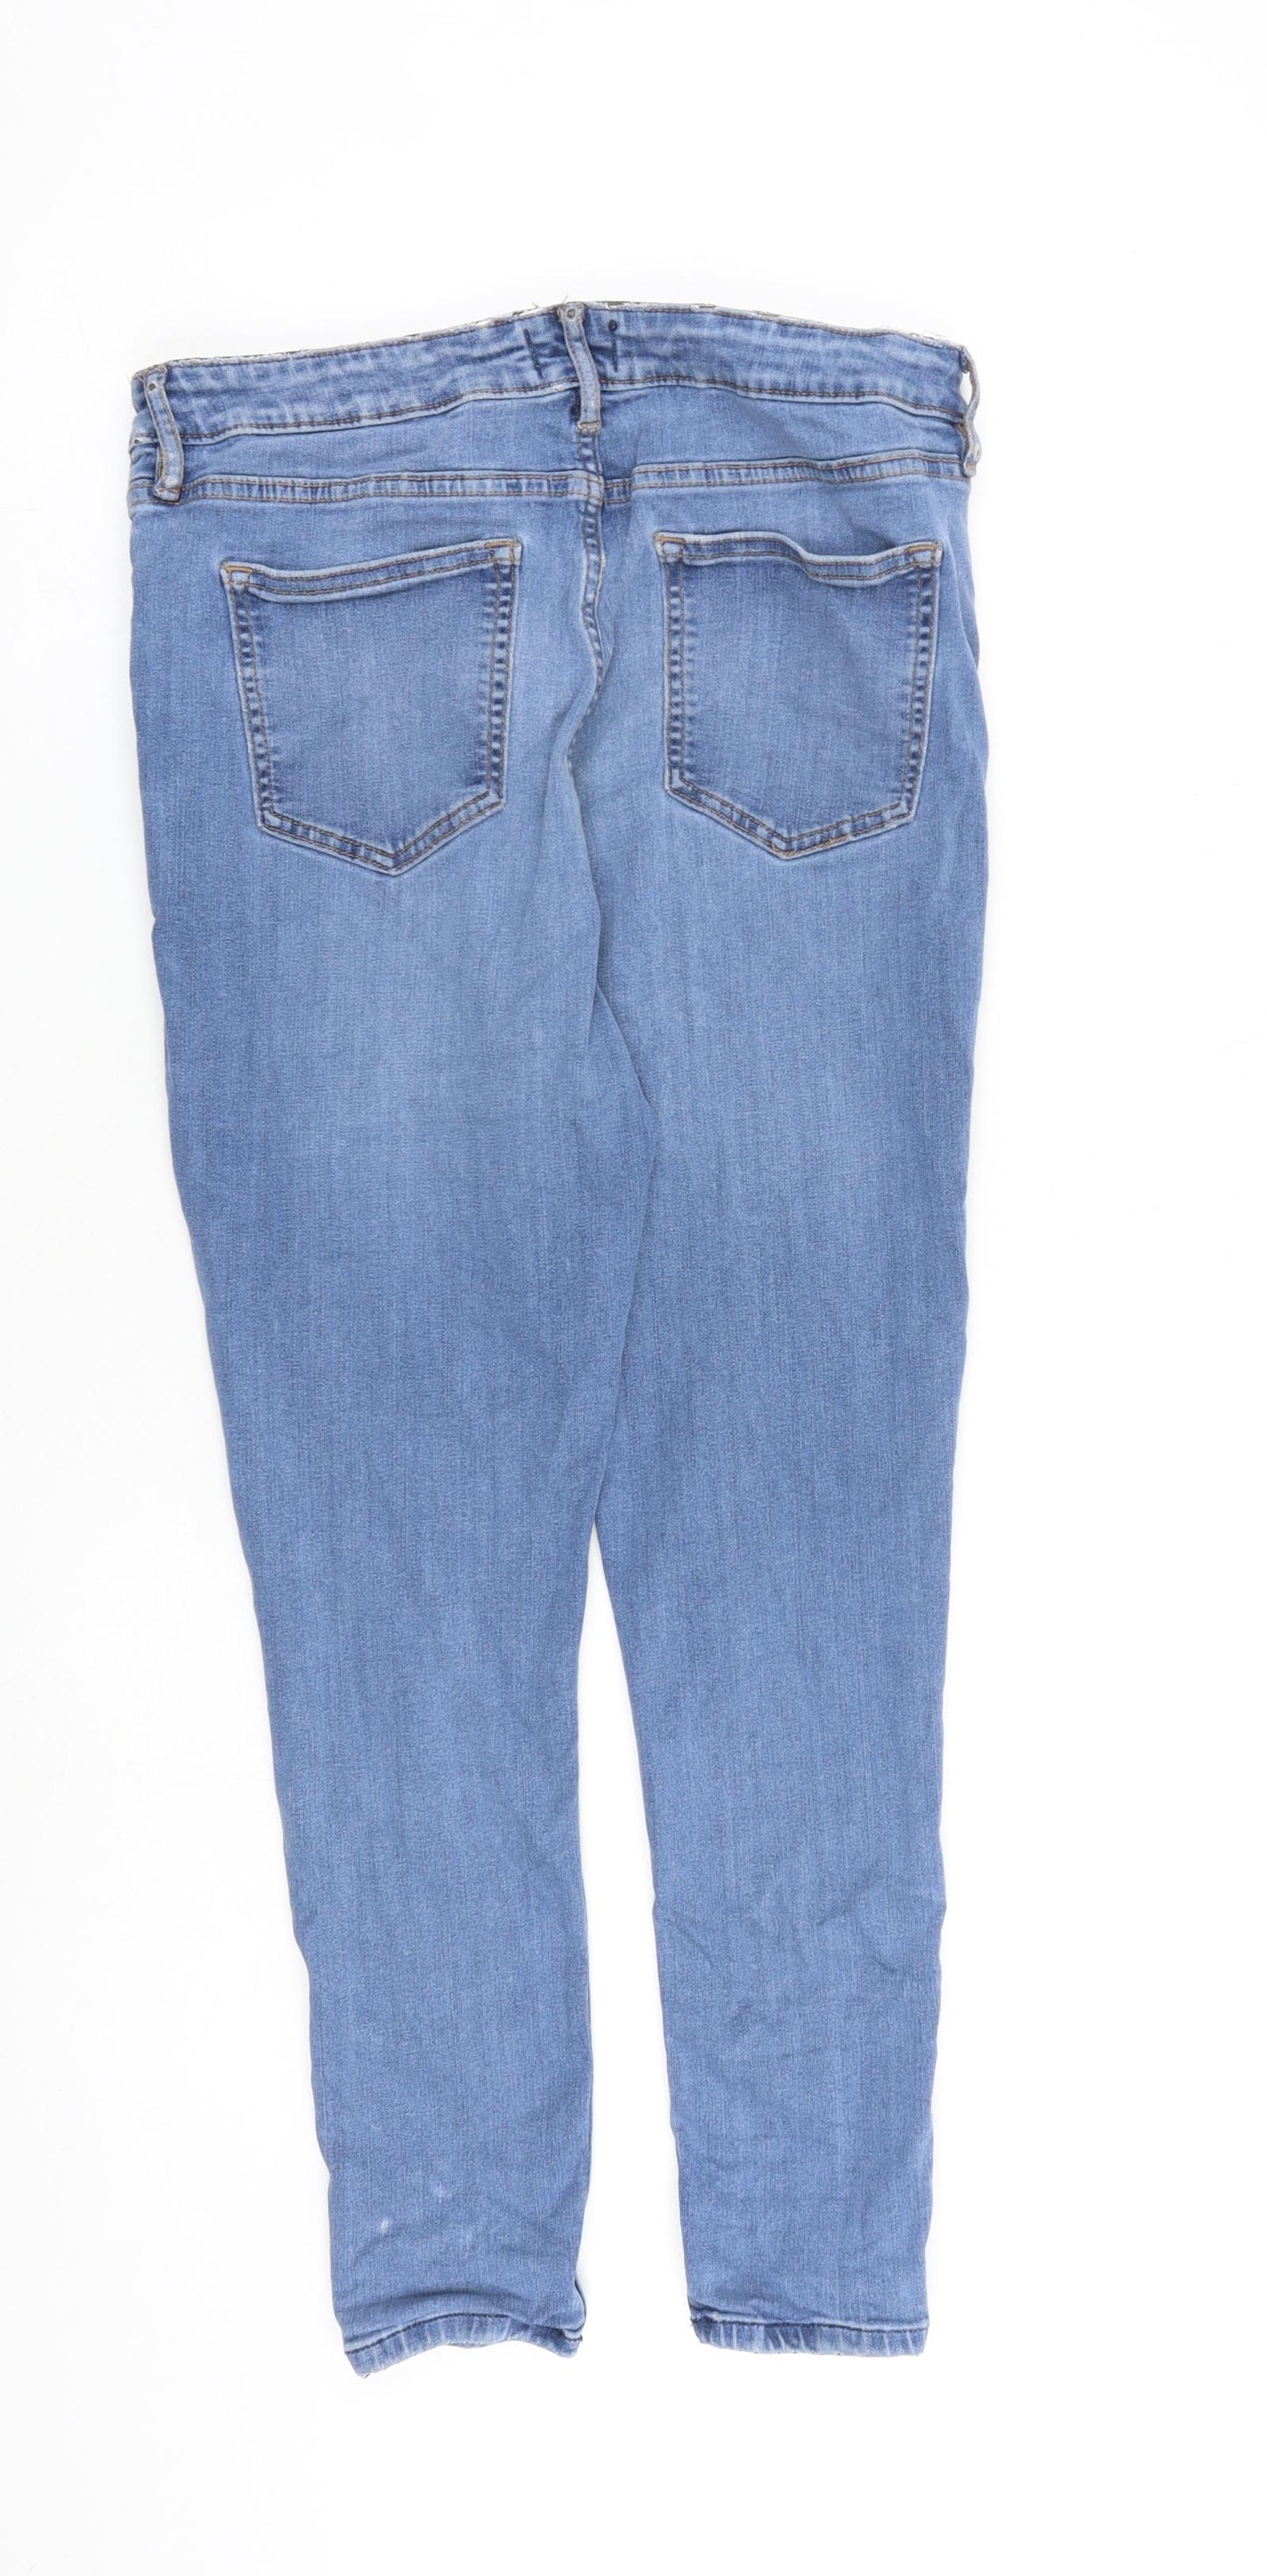 F&F Womens Blue Cotton Skinny Jeans Size 14 L24 in Regular Zip